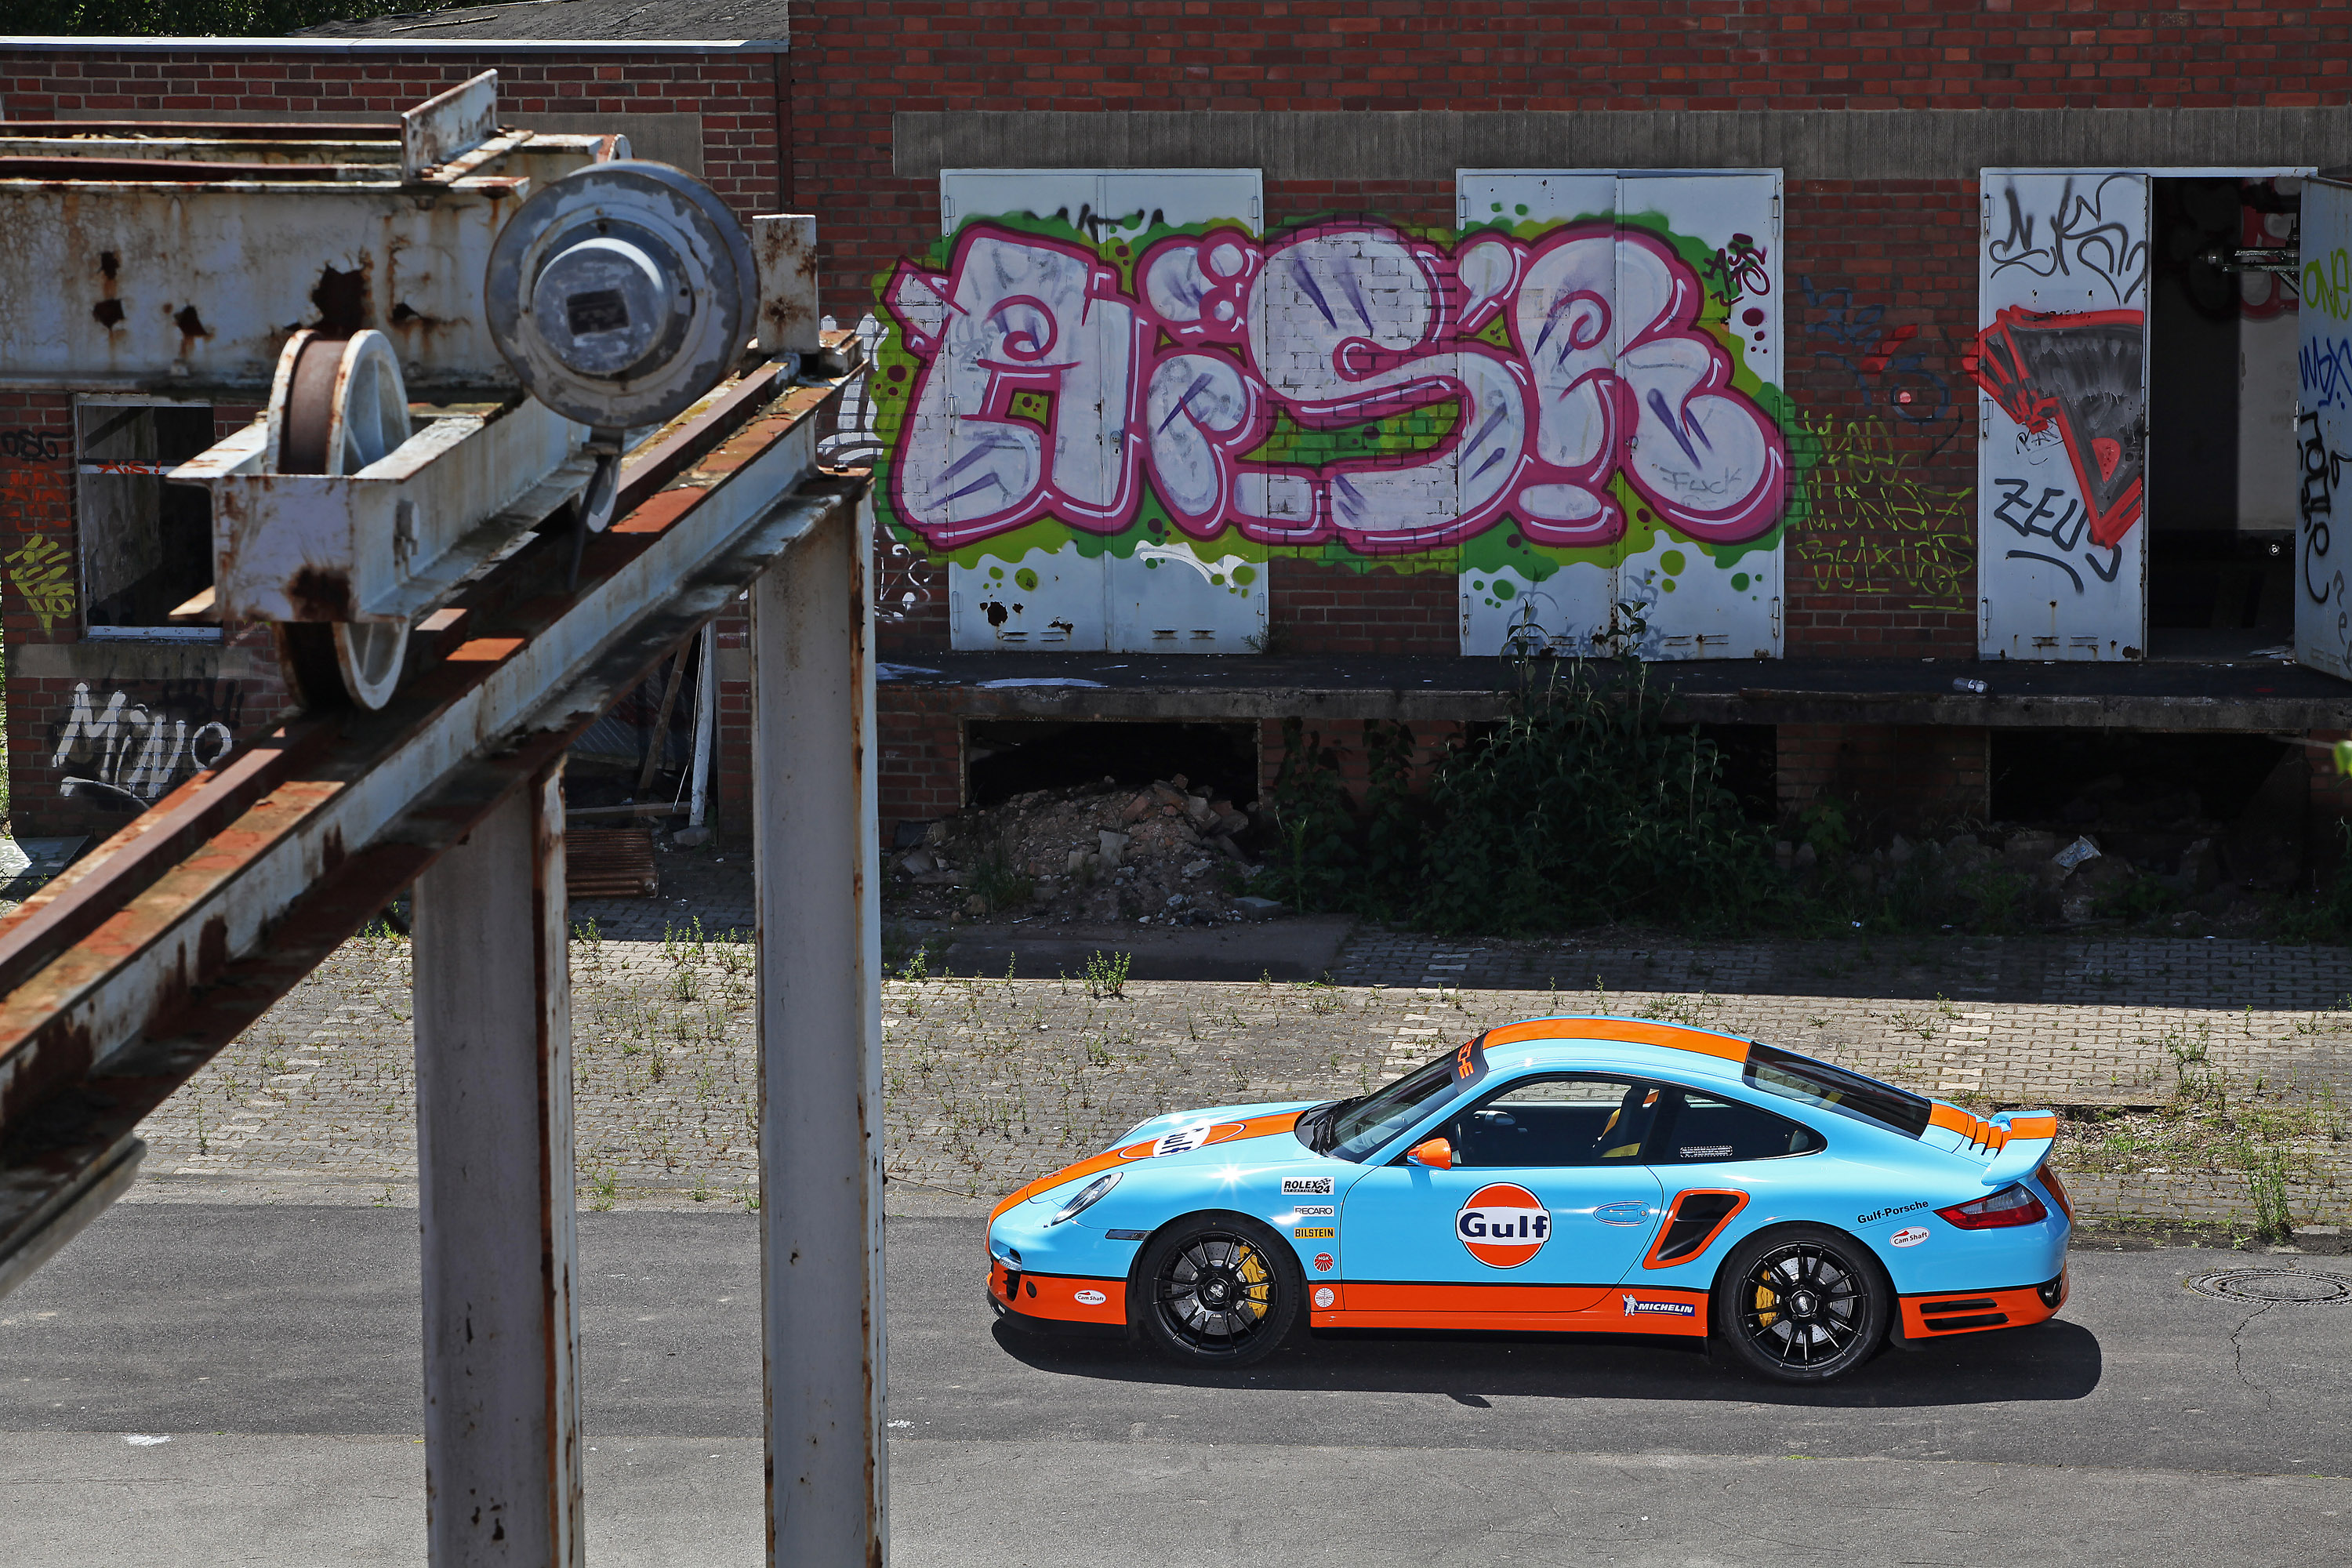 2013, Cam shaft, Porsche, 997, Turbo, Supercar, Supercars Wallpaper